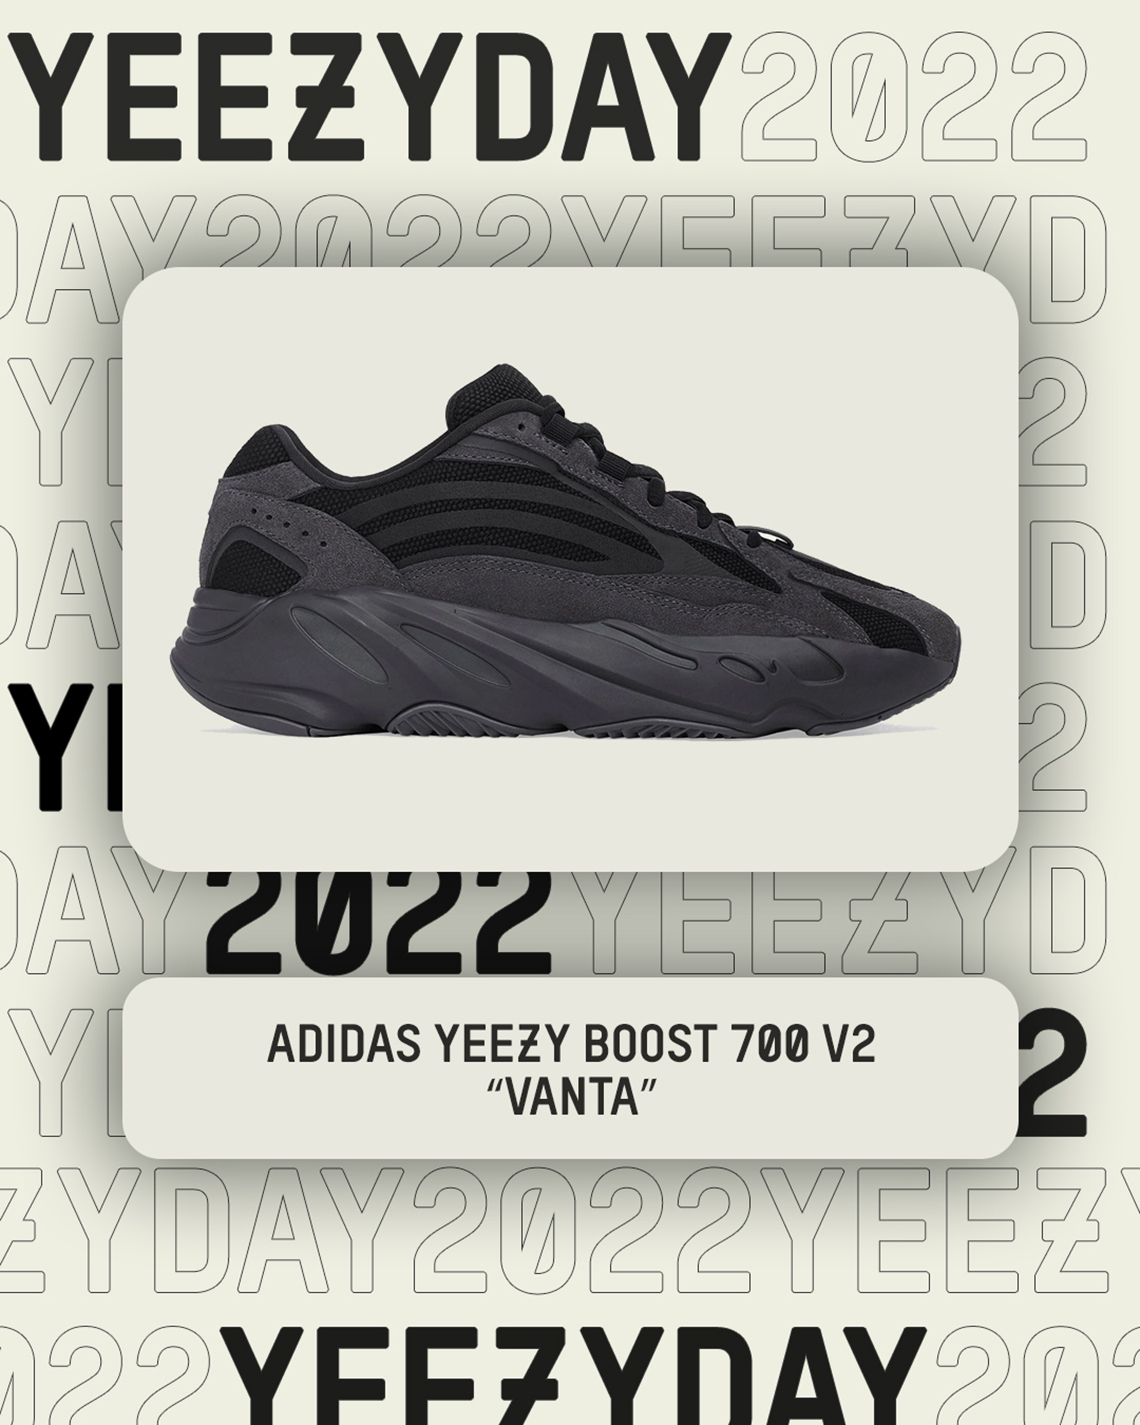 Yeezy Day 2022 footwear adidas terrex free hiker primeblu fz3626 blue V2 Vanta